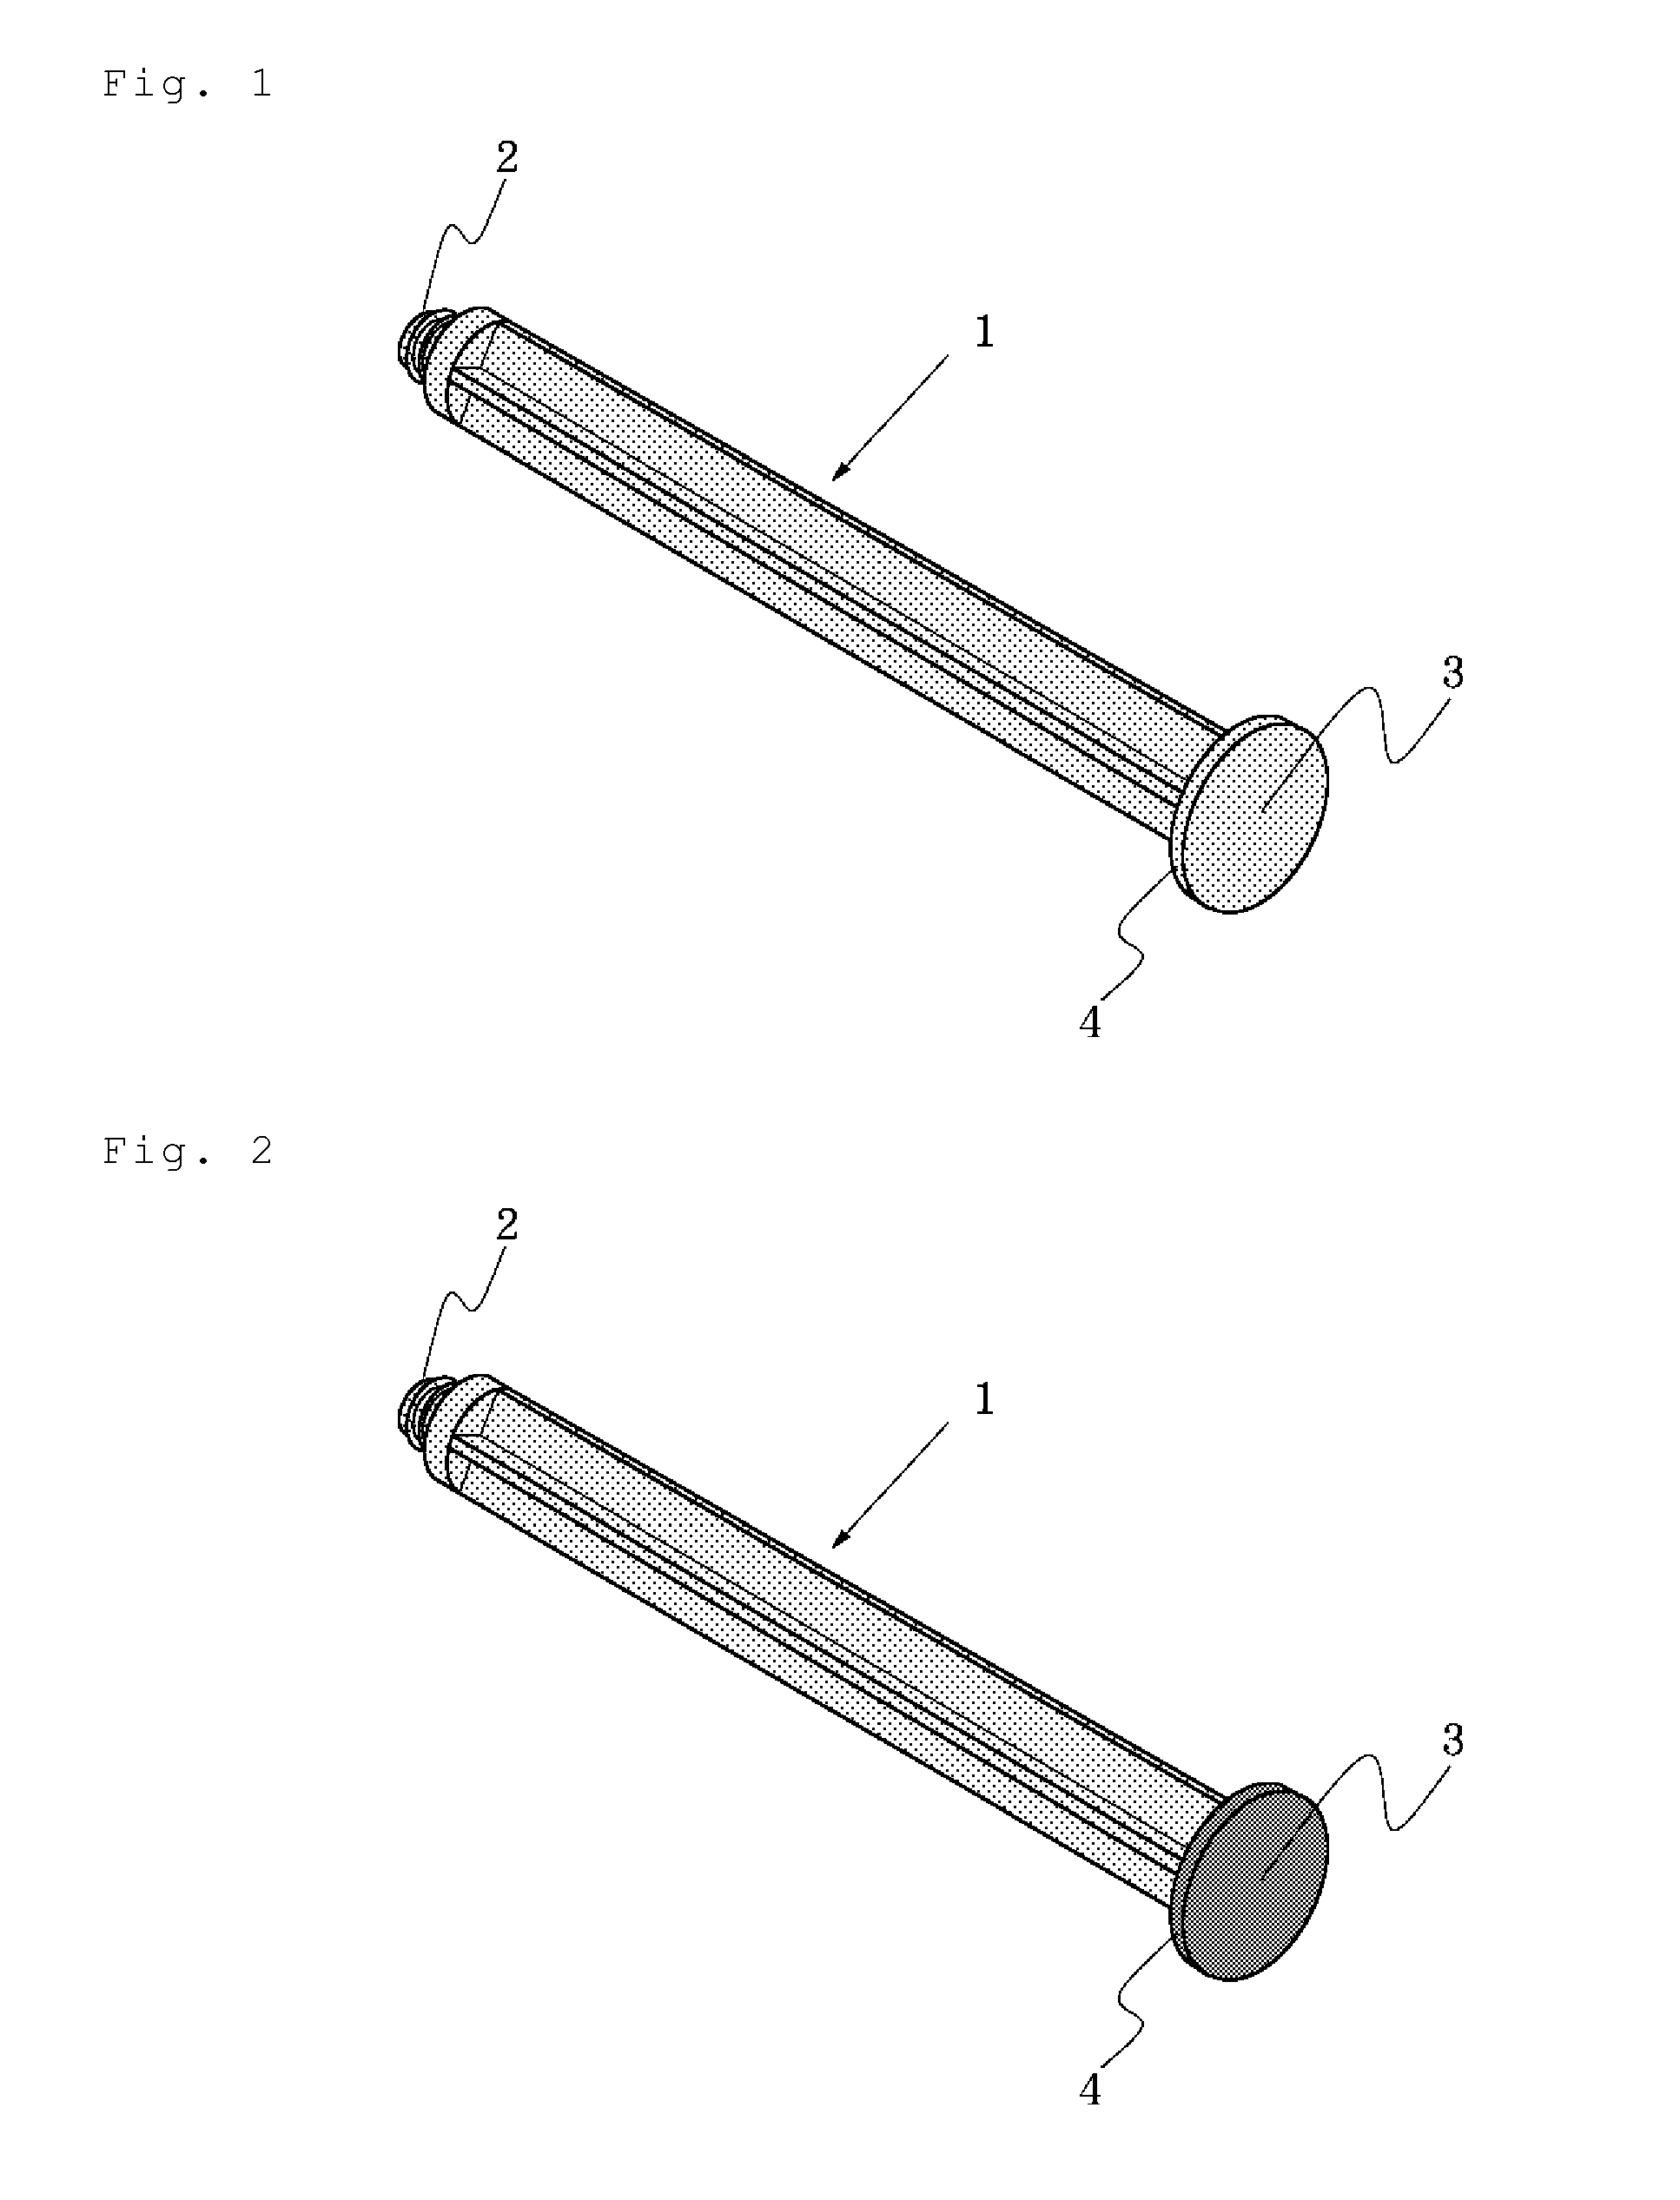 Plunger rod and syringe